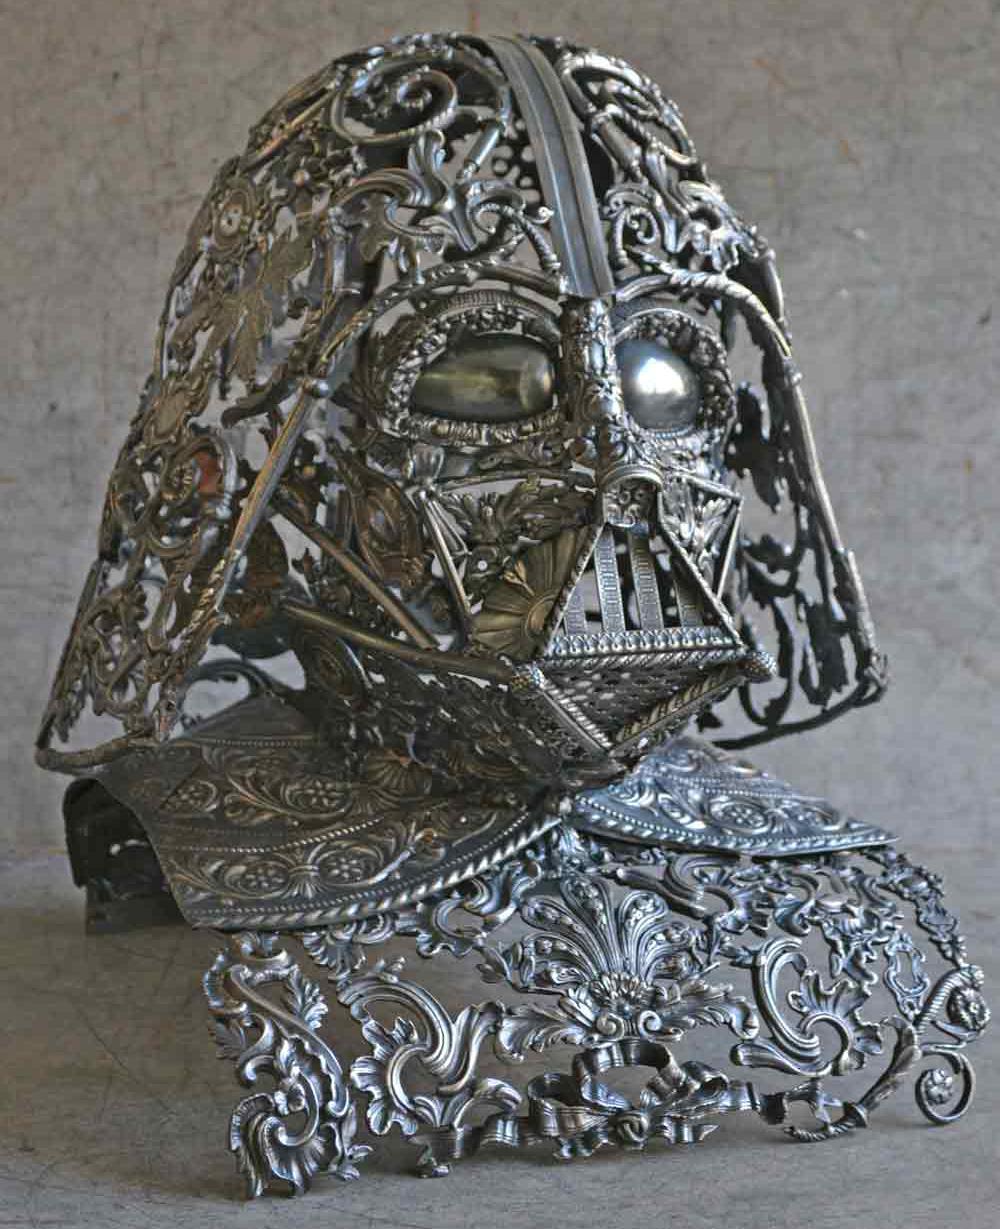 Darth Vader - Bronze Sculpture - Unique Piece